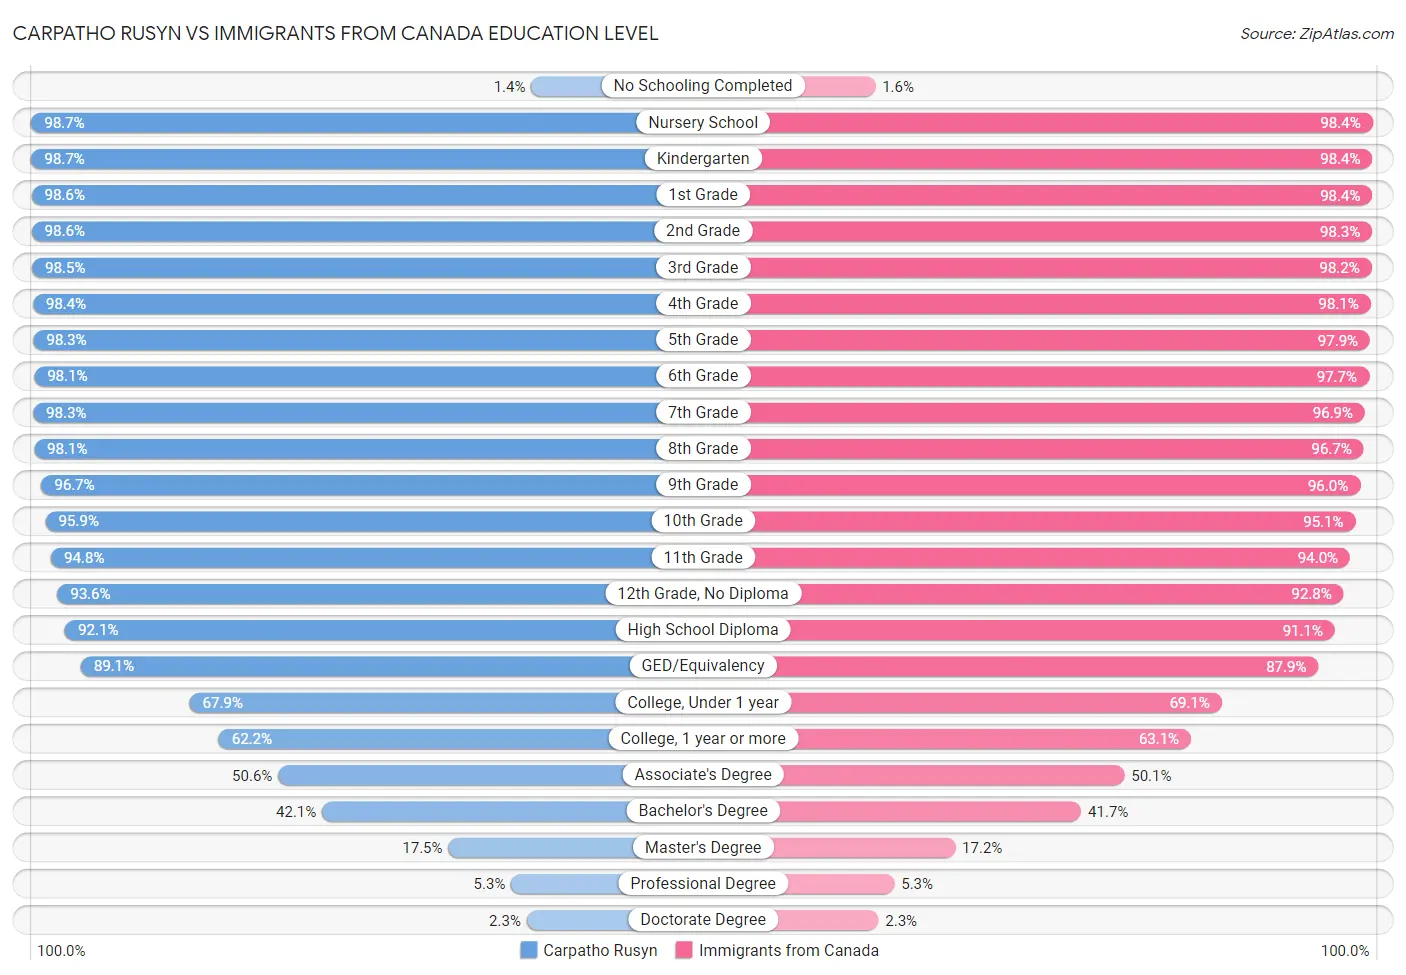 Carpatho Rusyn vs Immigrants from Canada Education Level